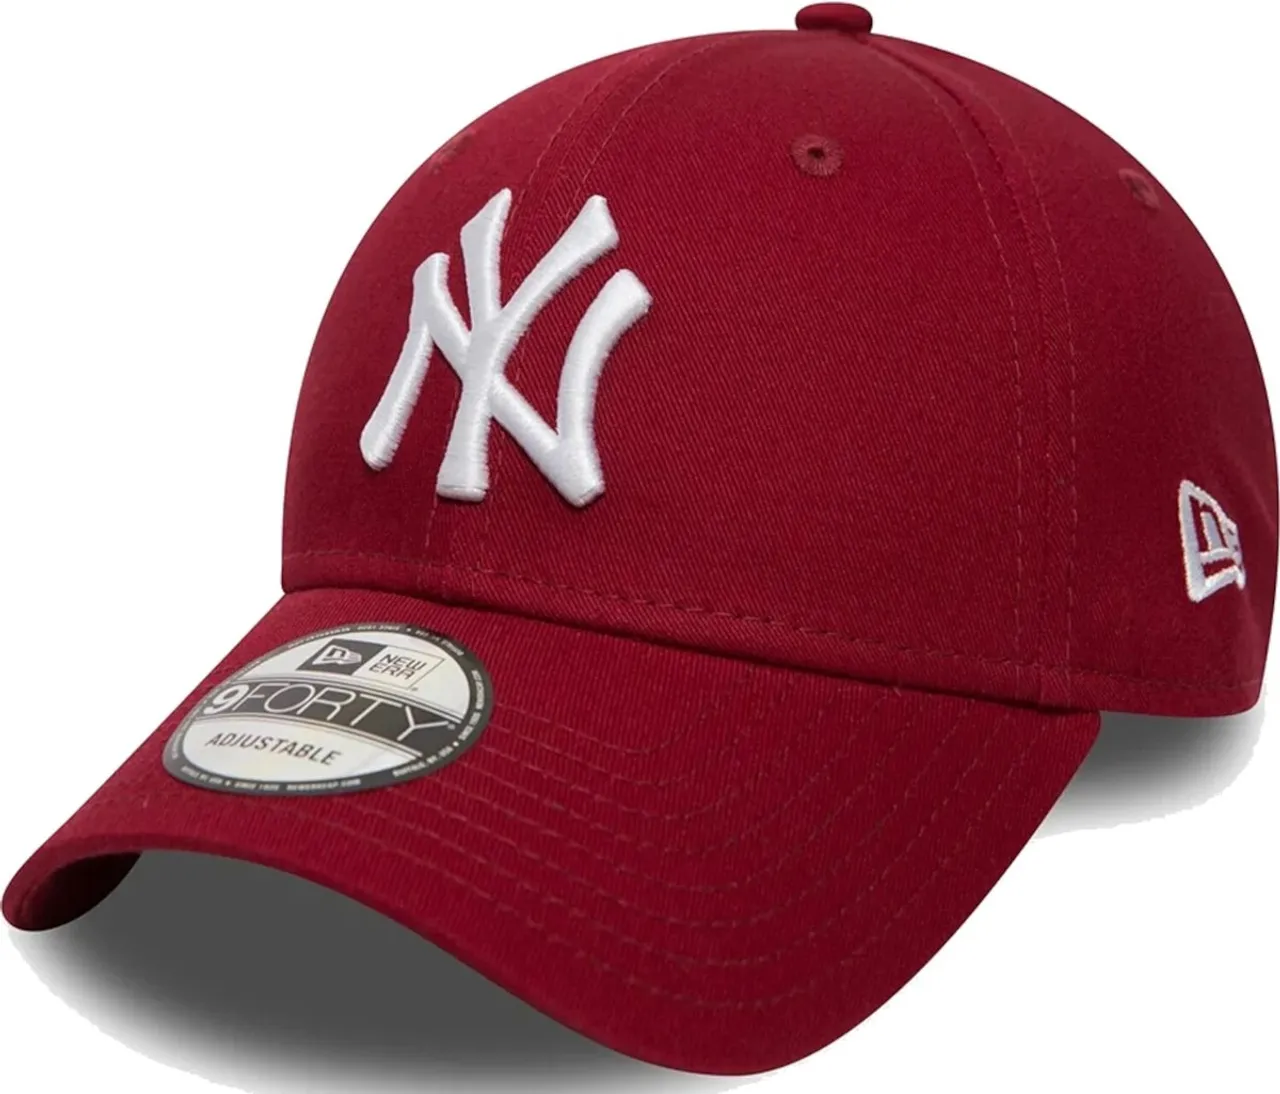 New Era LEAG ESNL 940 New York Yankees Cap - Cardinal - One